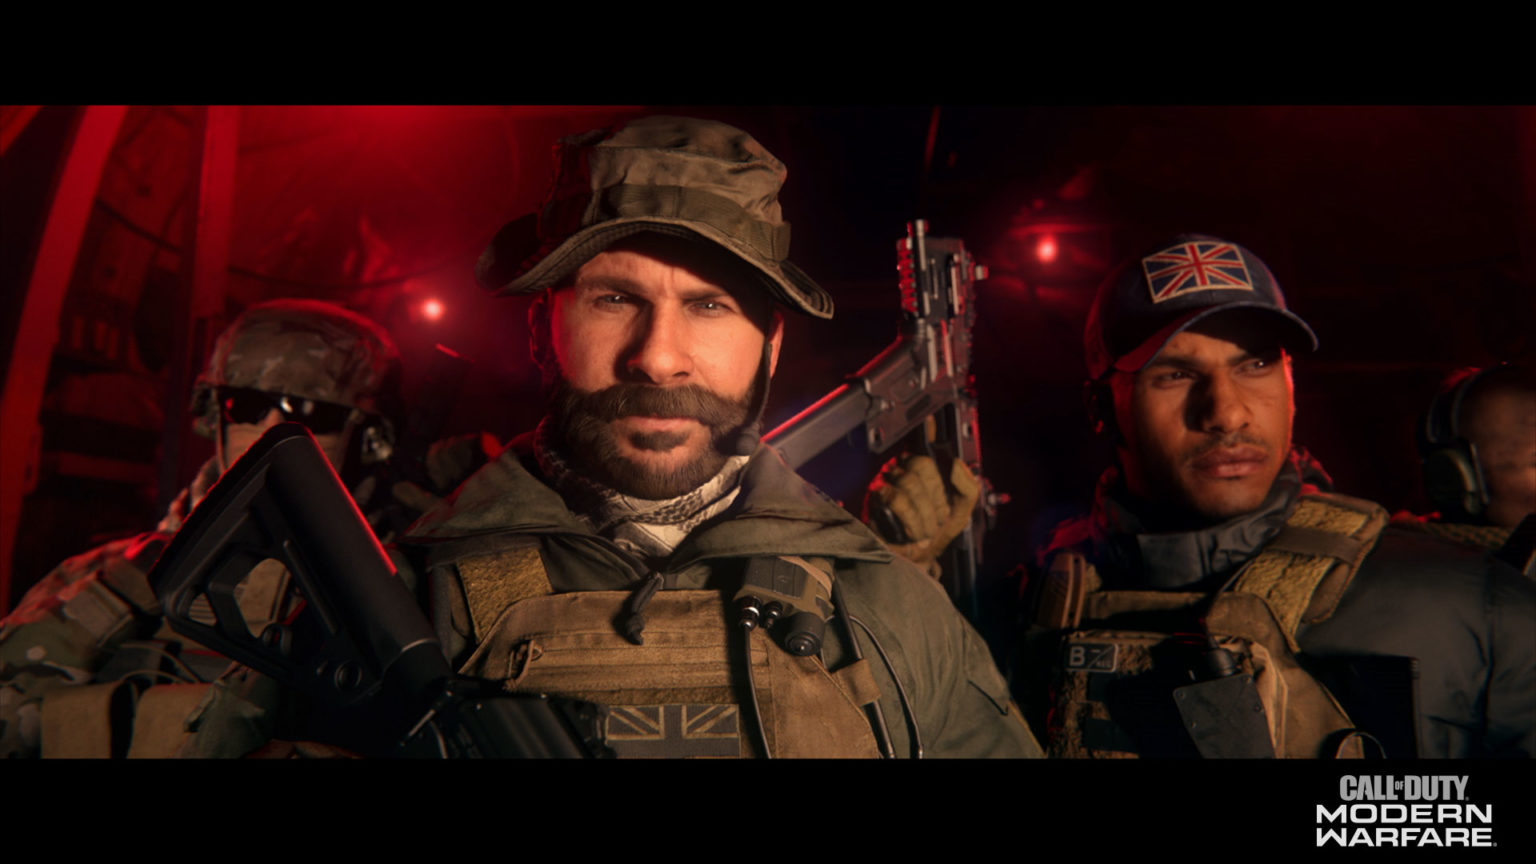 Captain Price and Gaz confirmed for Call of Duty: Modern Warfare season 4.